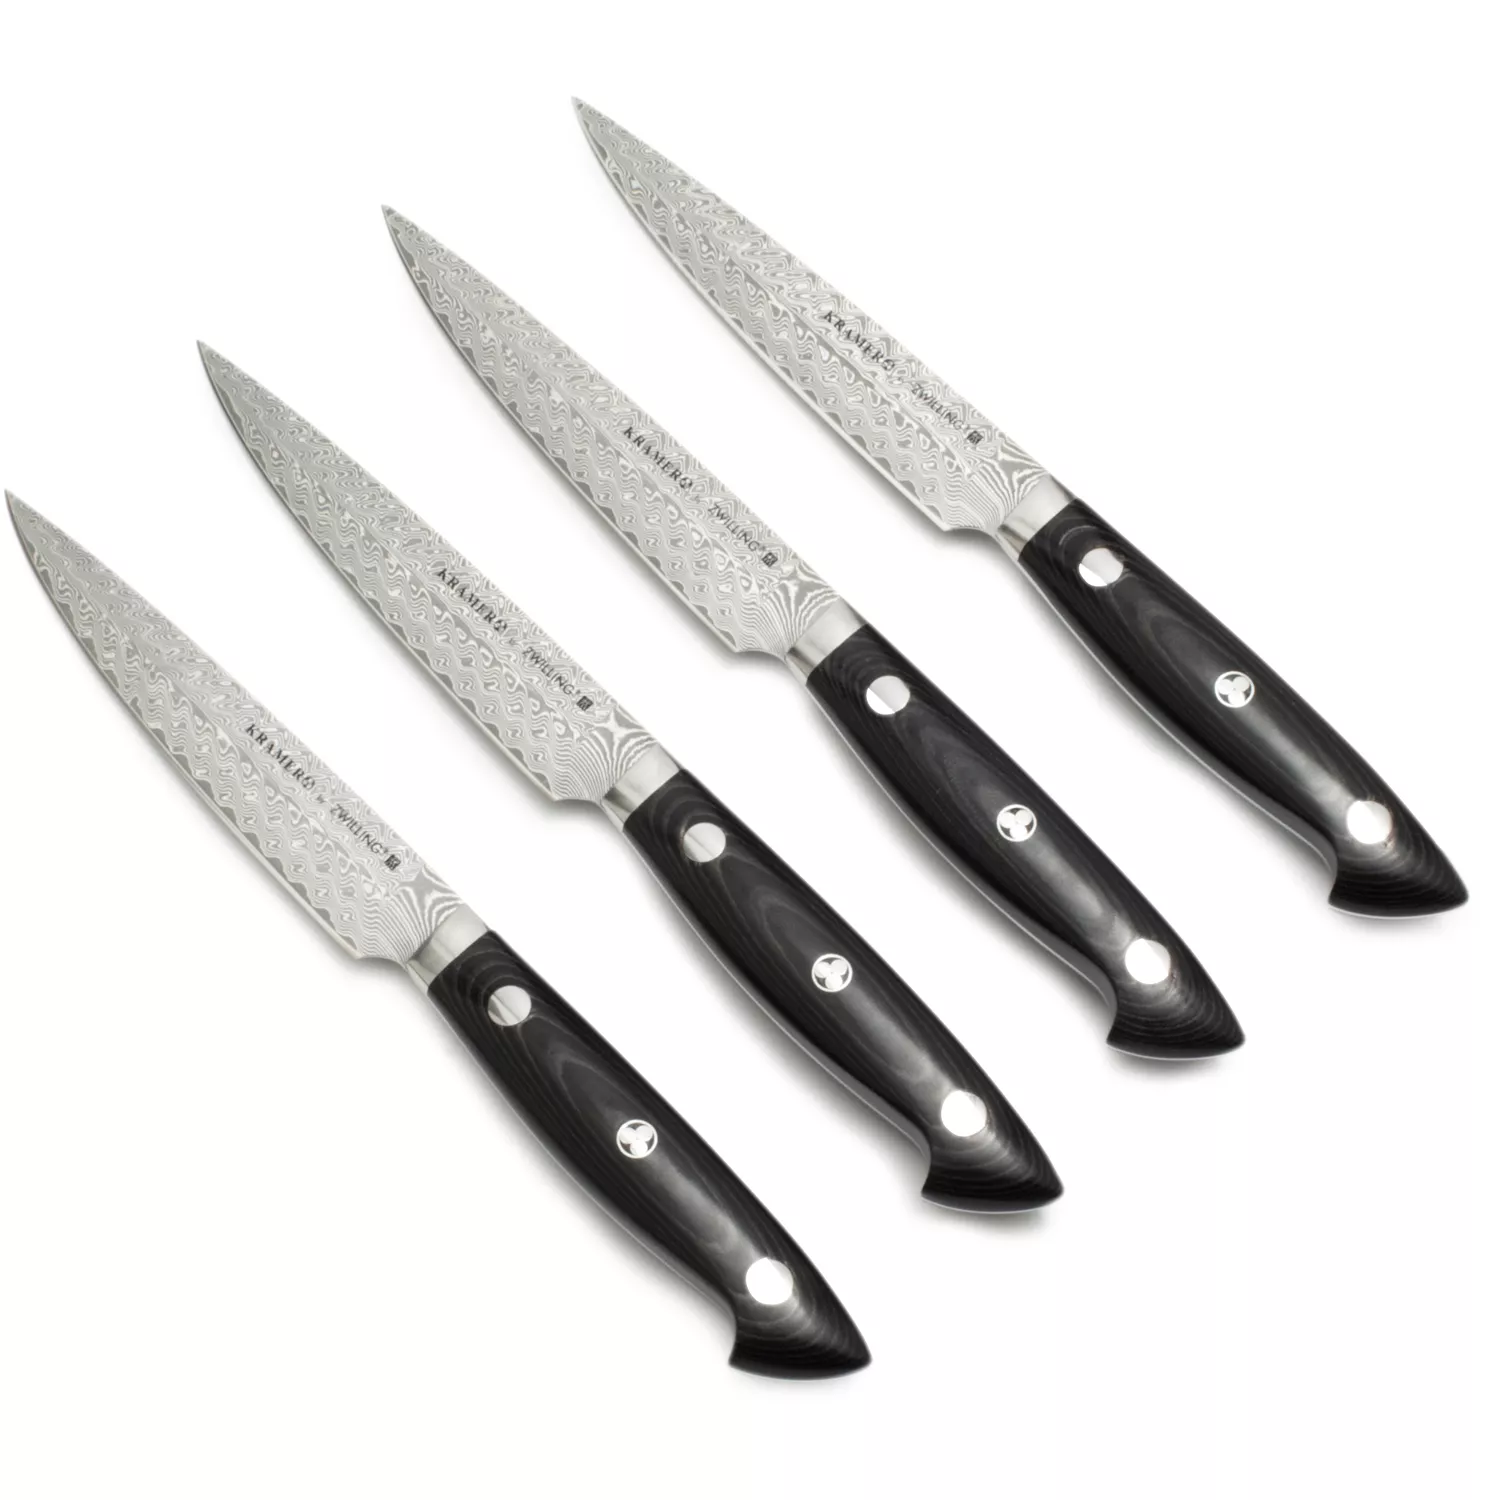 Bob Kramer Stainless Damascus Steak Knives by Zwilling J.A. Henckels, Set of 4